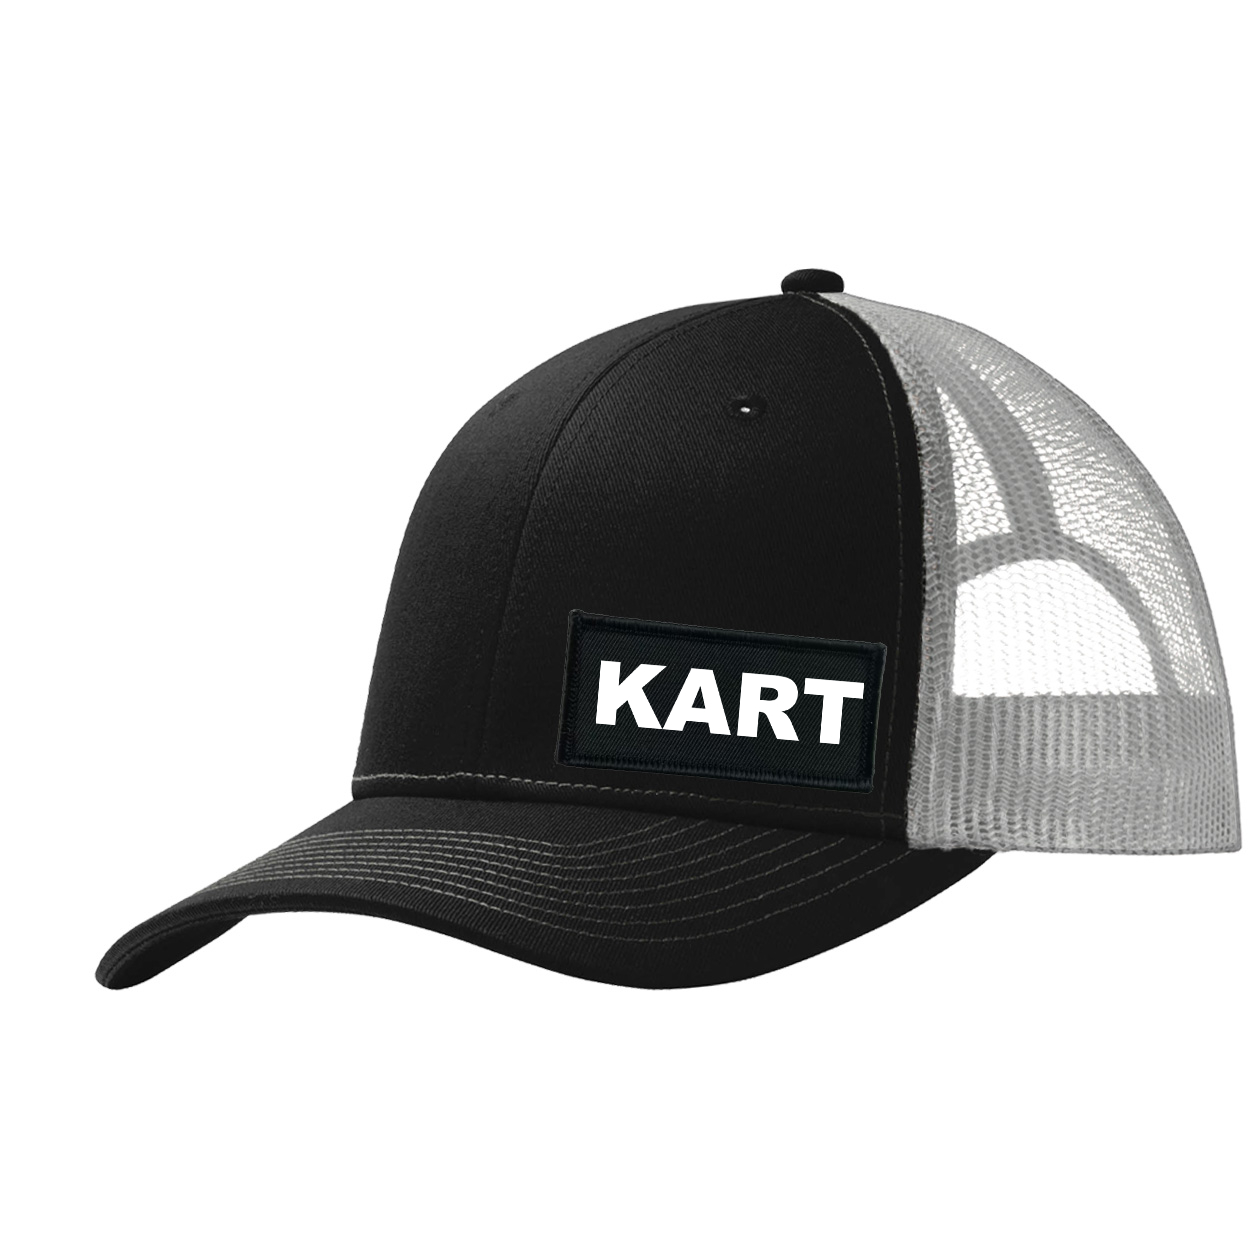 Kart Brand Logo Night Out Woven Patch Snapback Trucker Hat Black/Gray